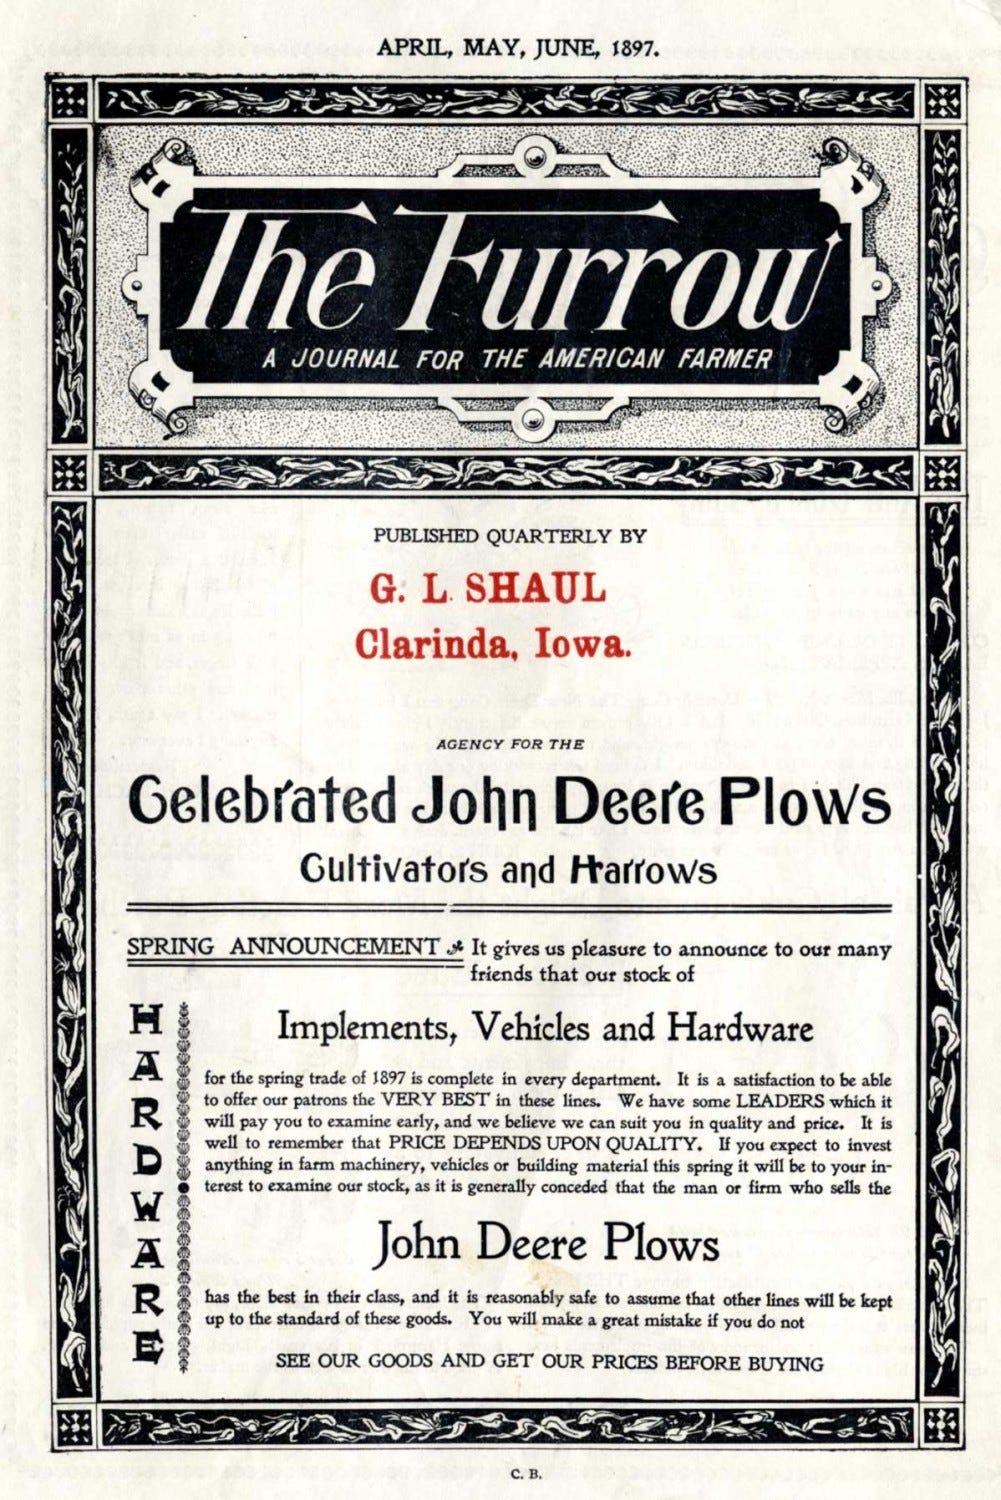 John Deere “The Furrow”